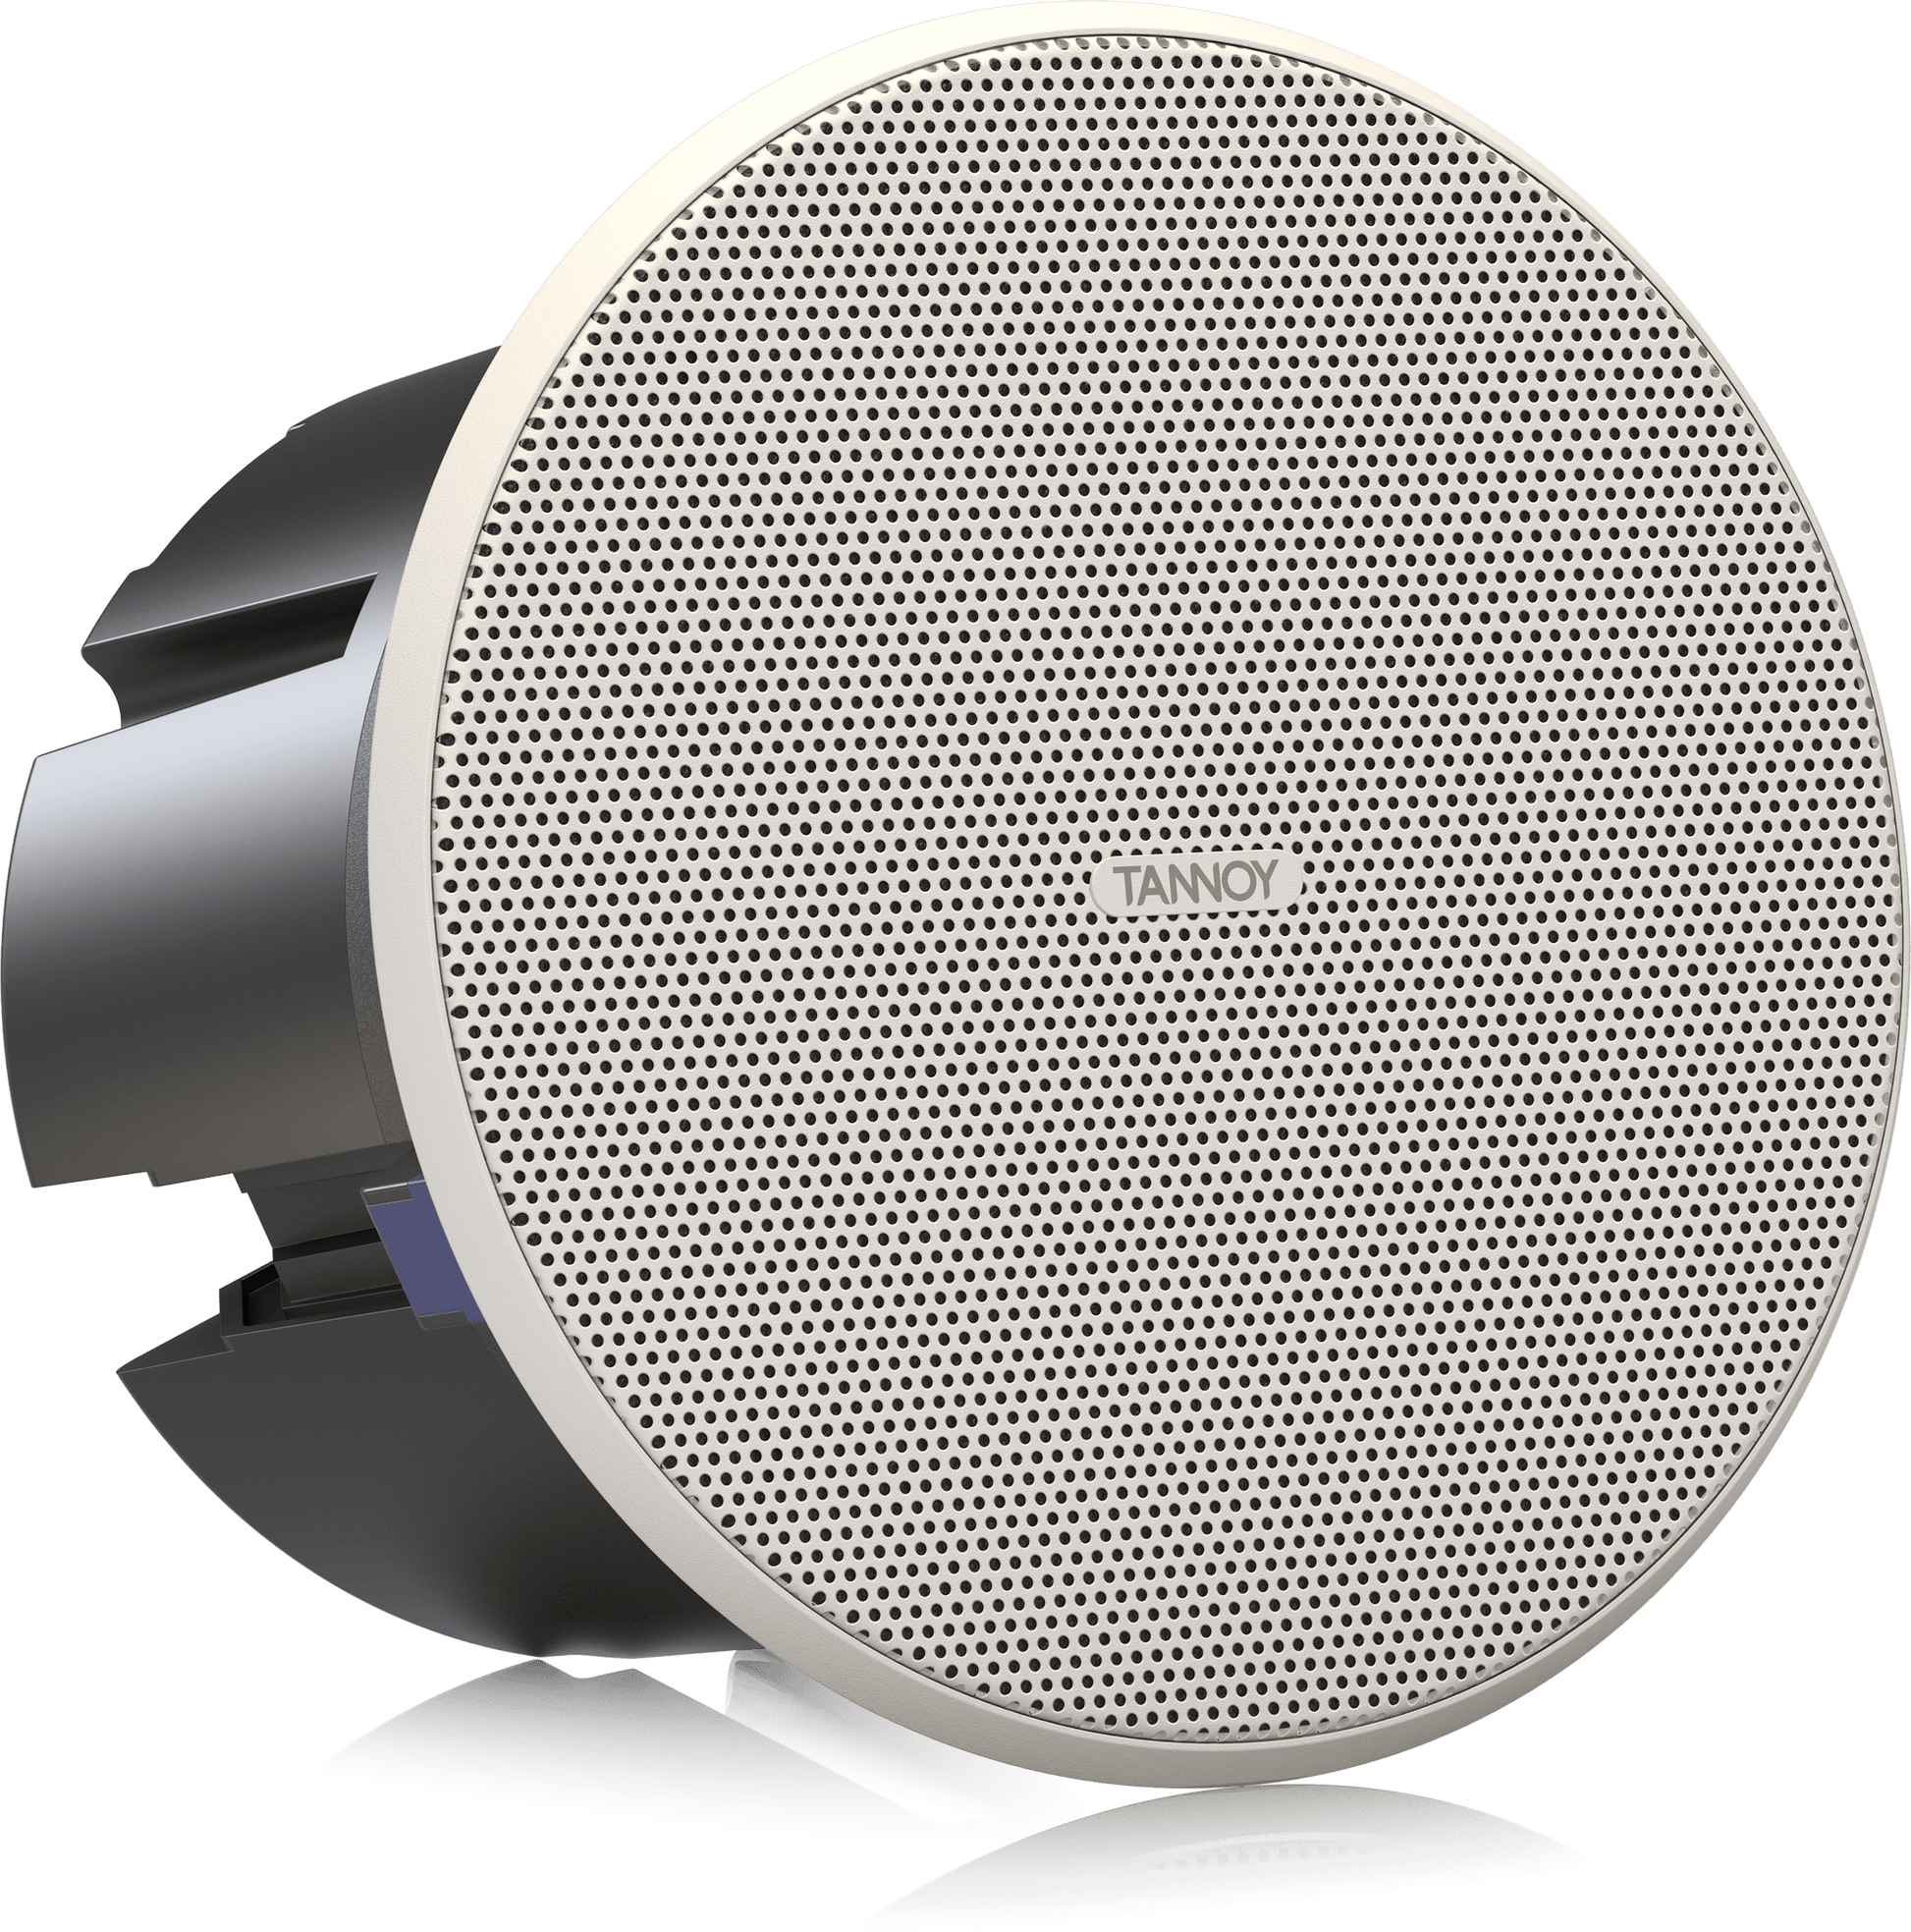 TANNOY QCI3 High-Performance 3" Full Range Ceiling Loudspeaker(Pair)